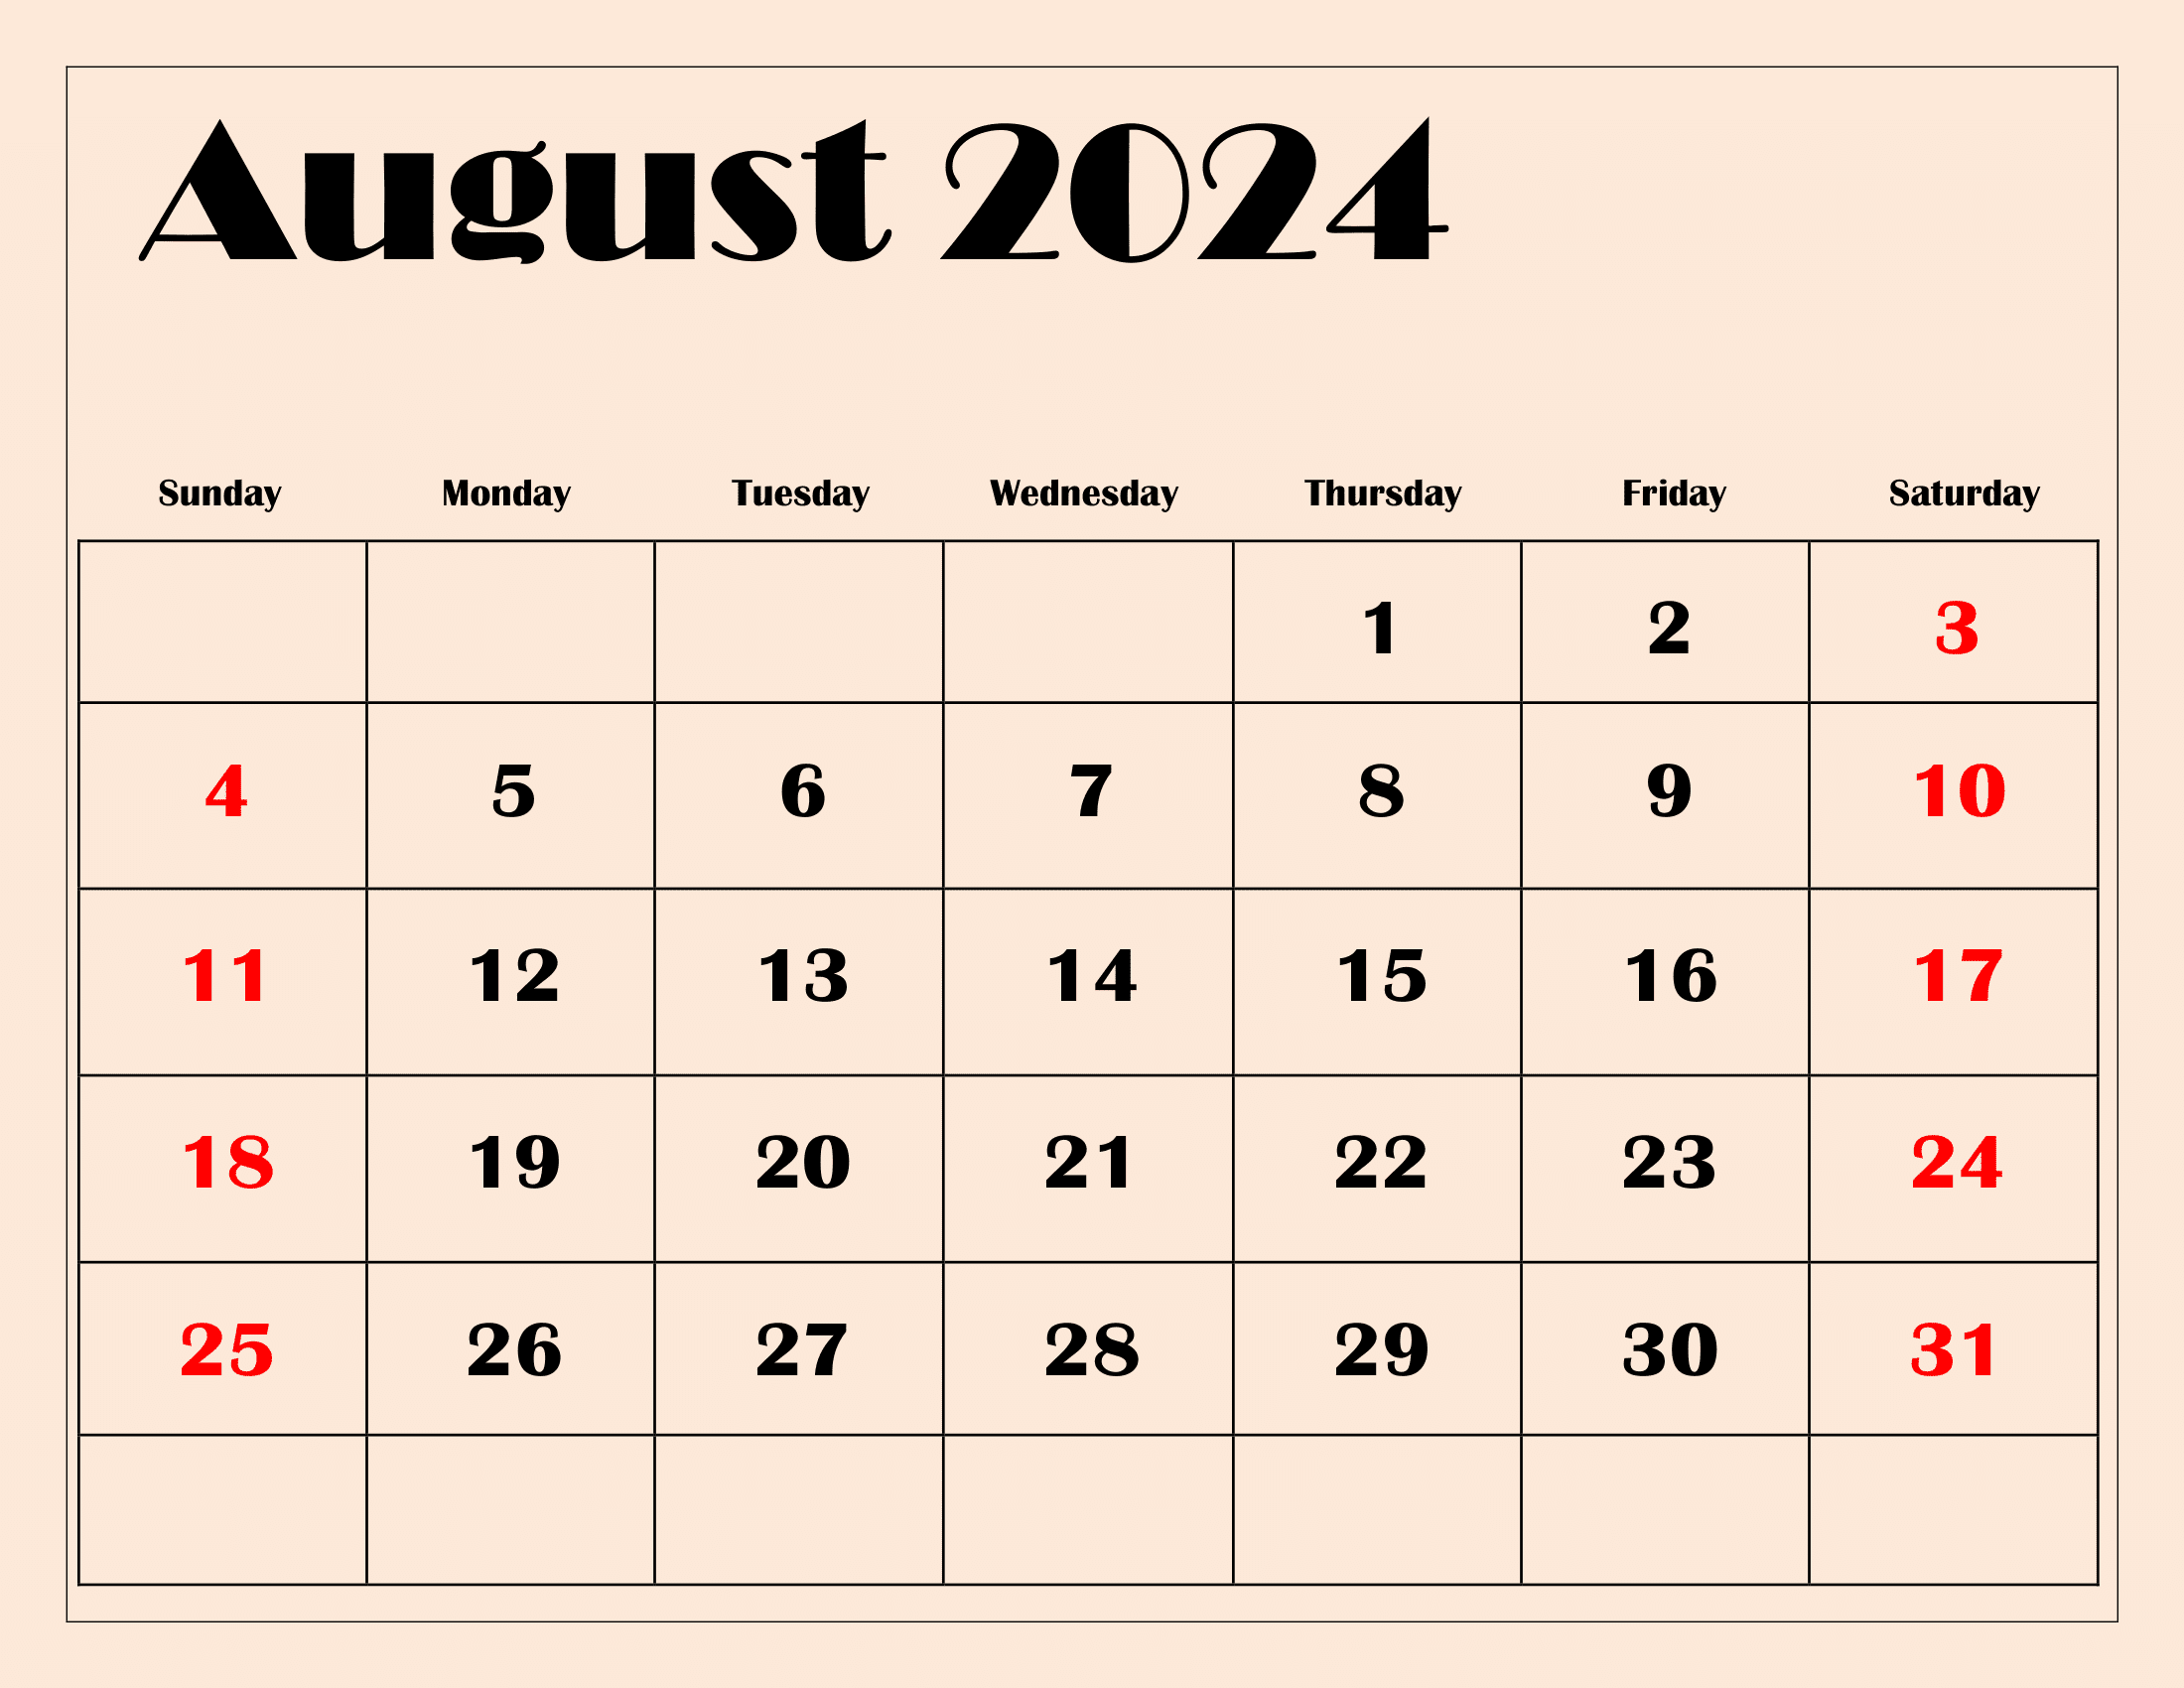 August 2024 Calendar Printable Pdf Templates Free Download intended for Free Printable August 2024 Calender